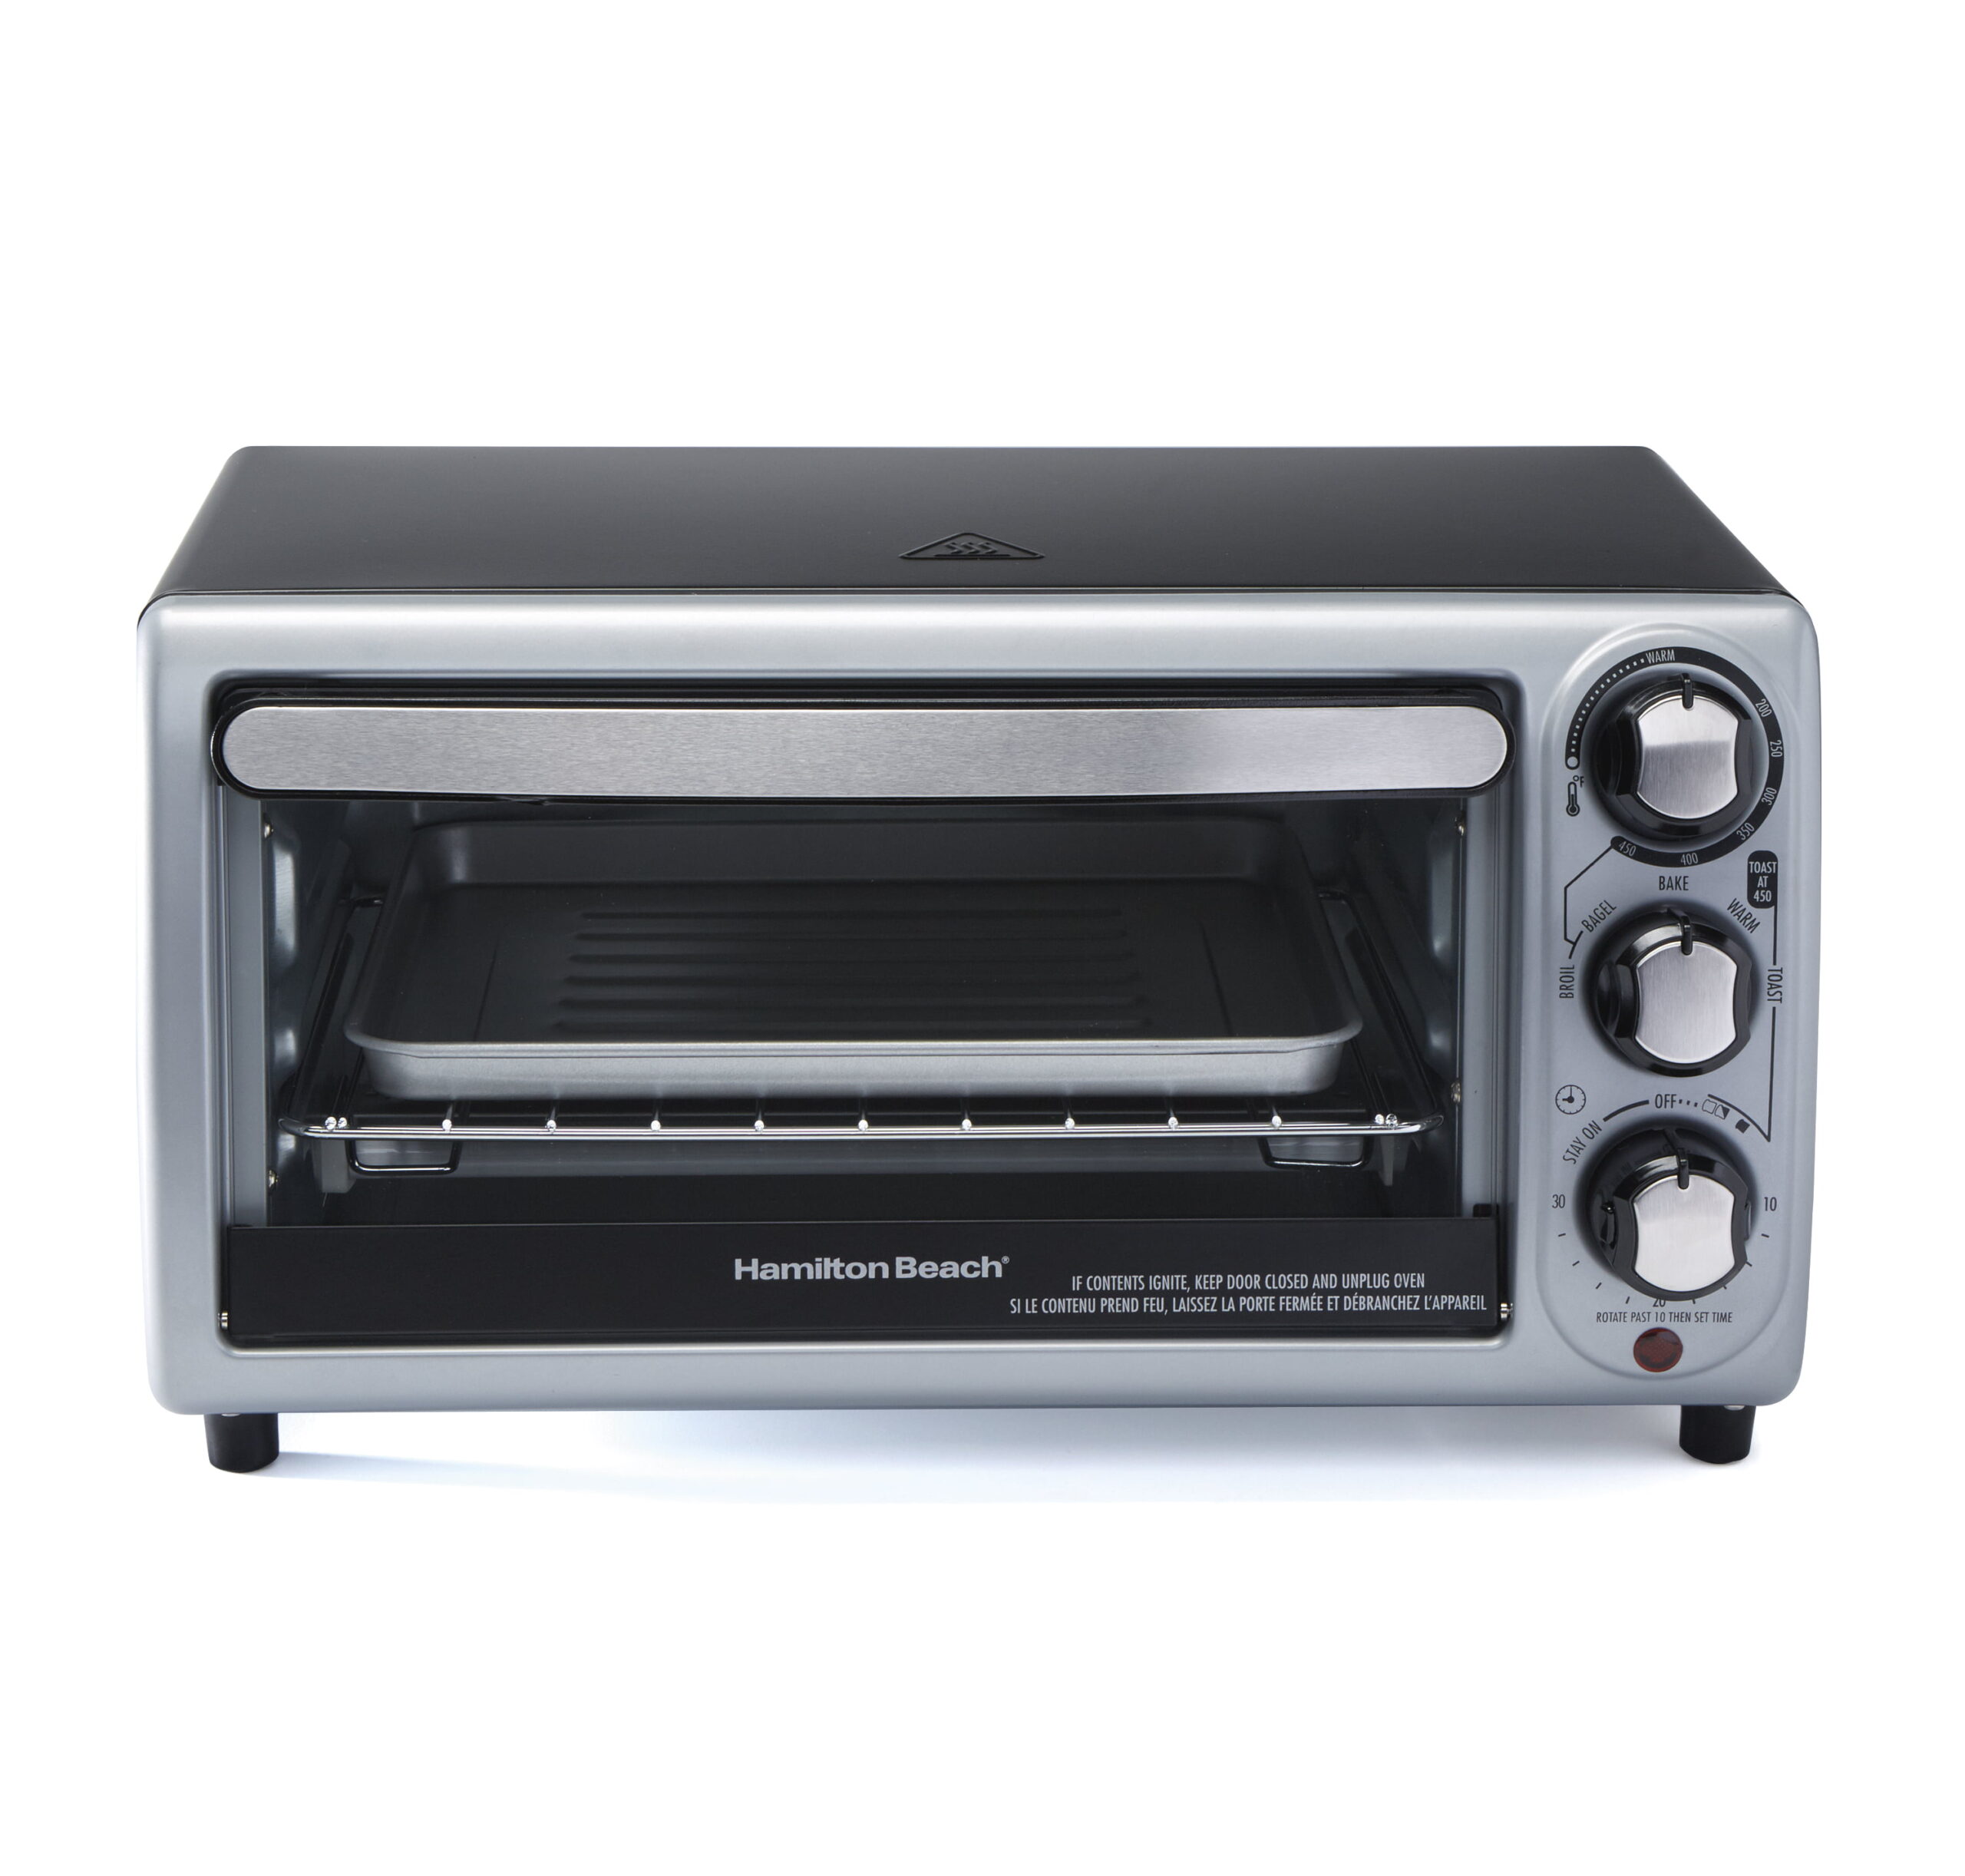 Hamilton Beach 4-Slice Silver Toaster Oven at